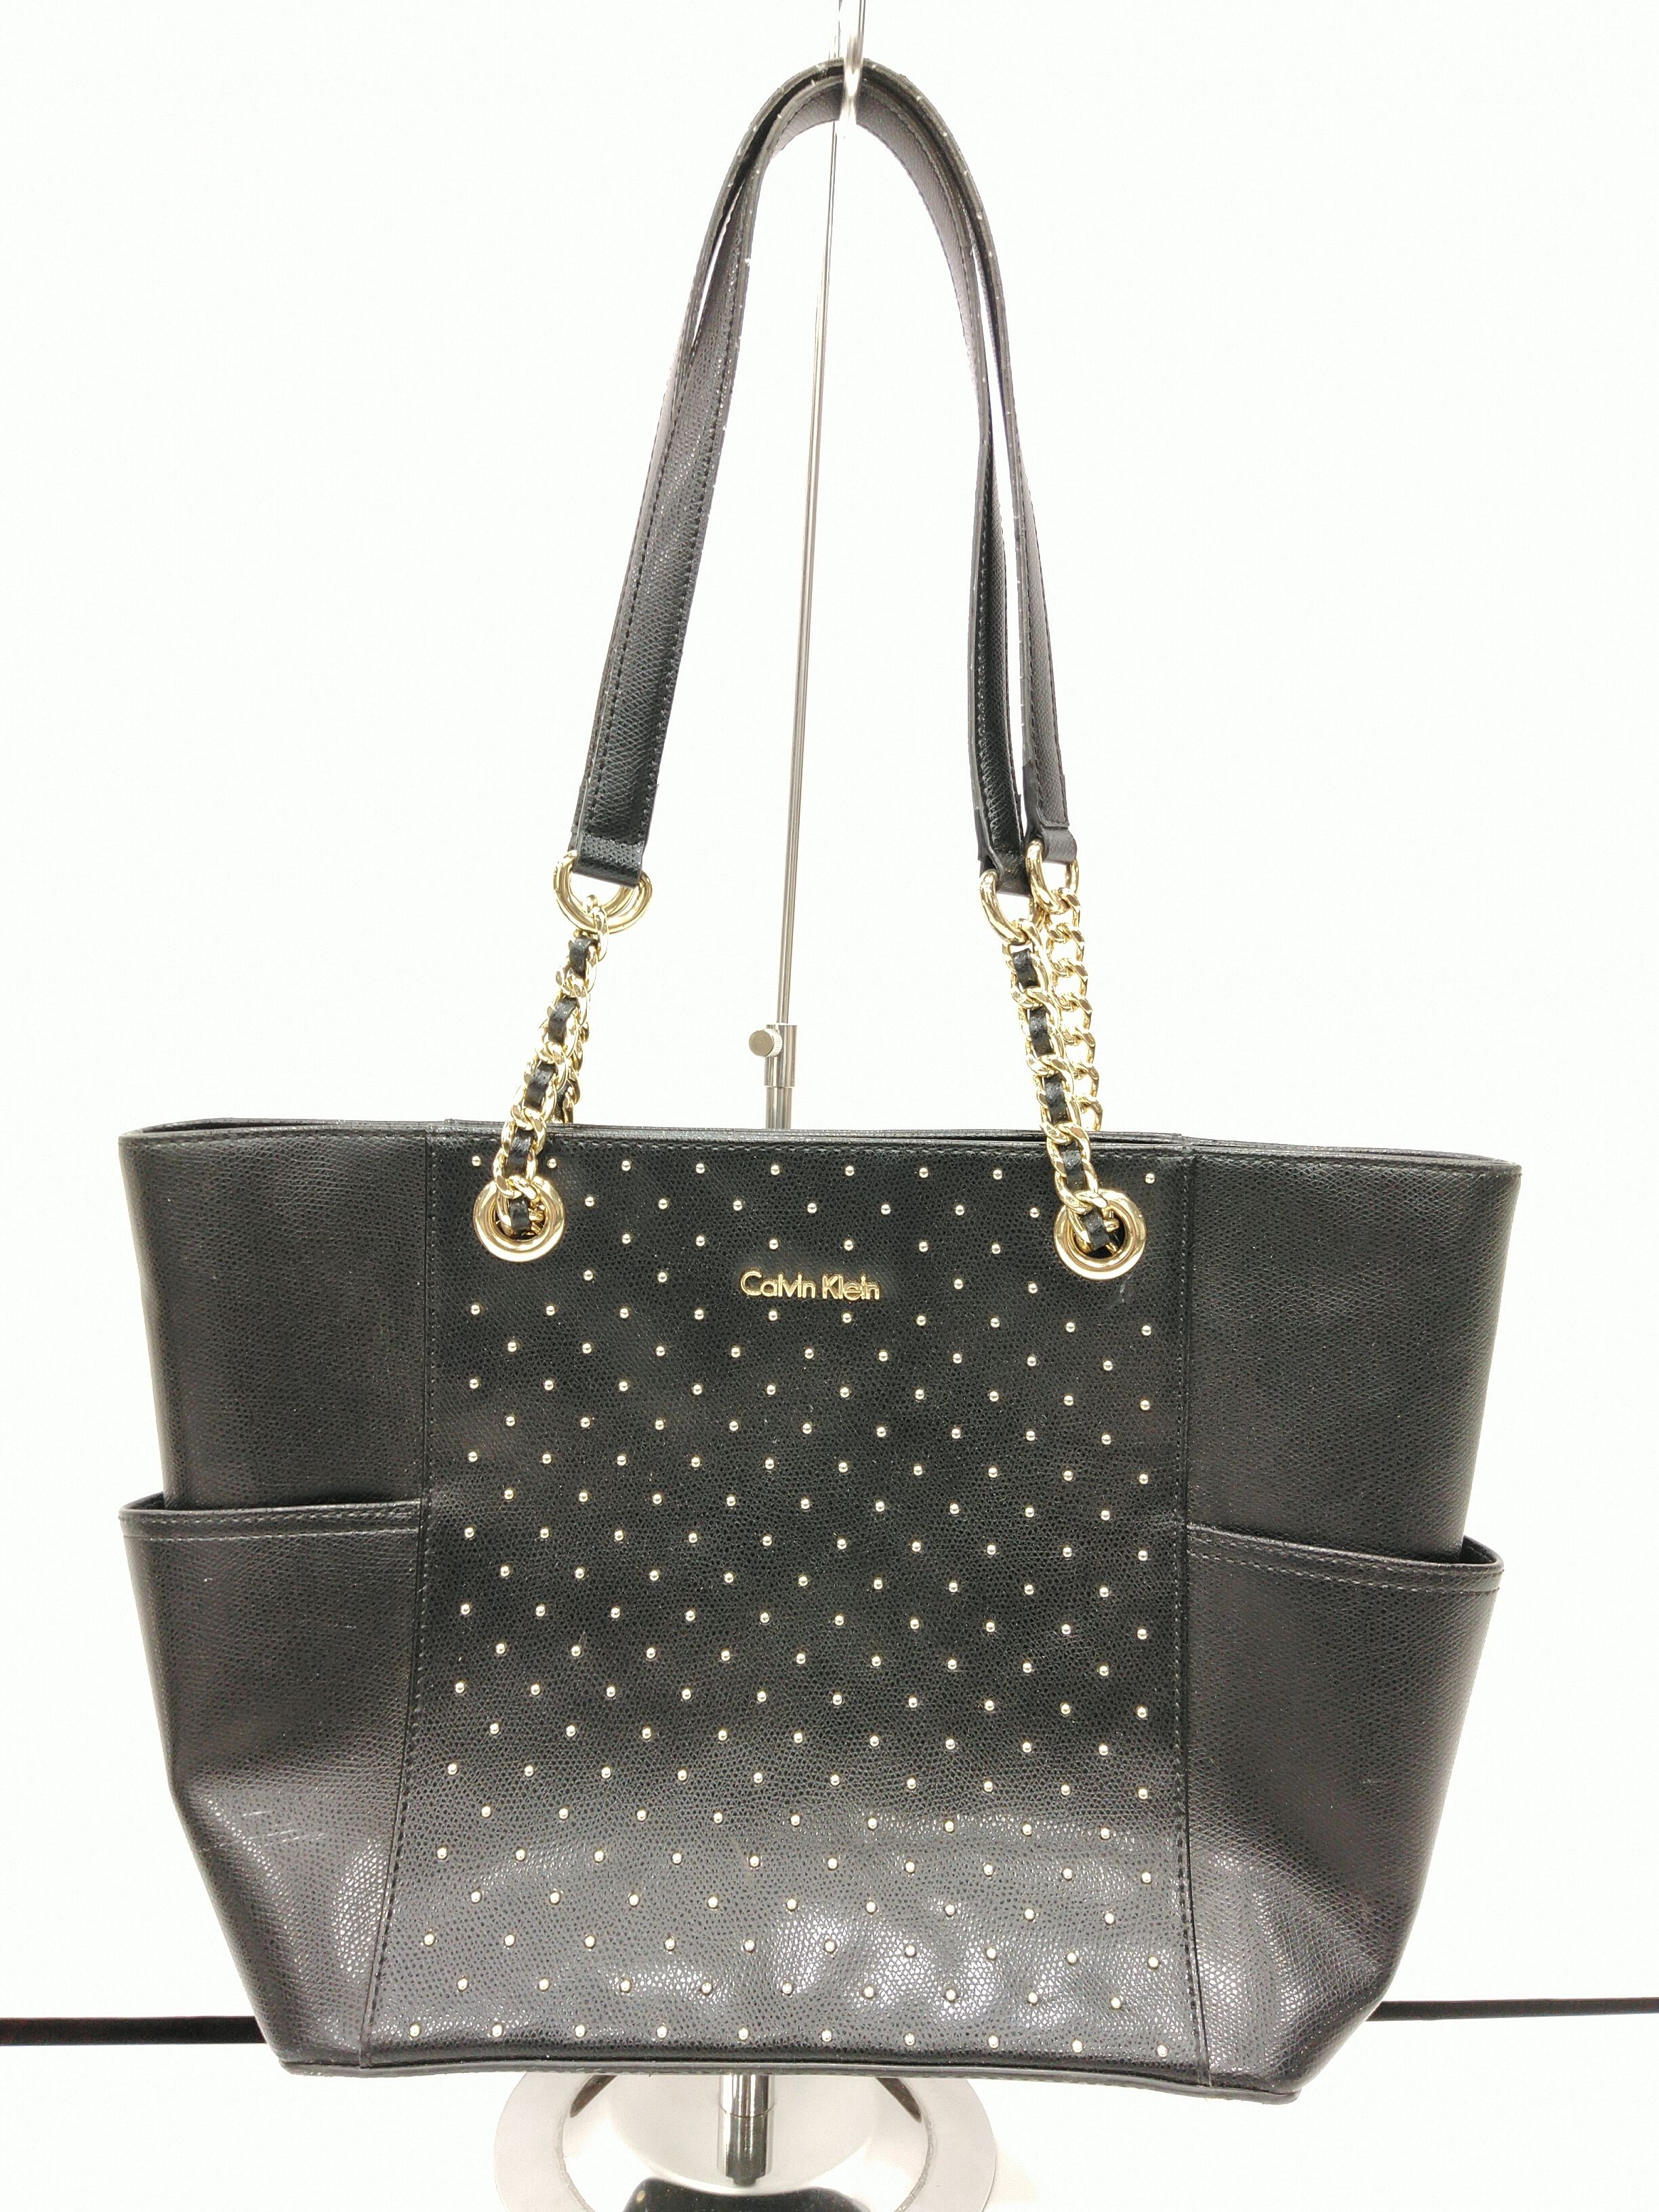 Calvin Klein Bags for Women - Shop on FARFETCH